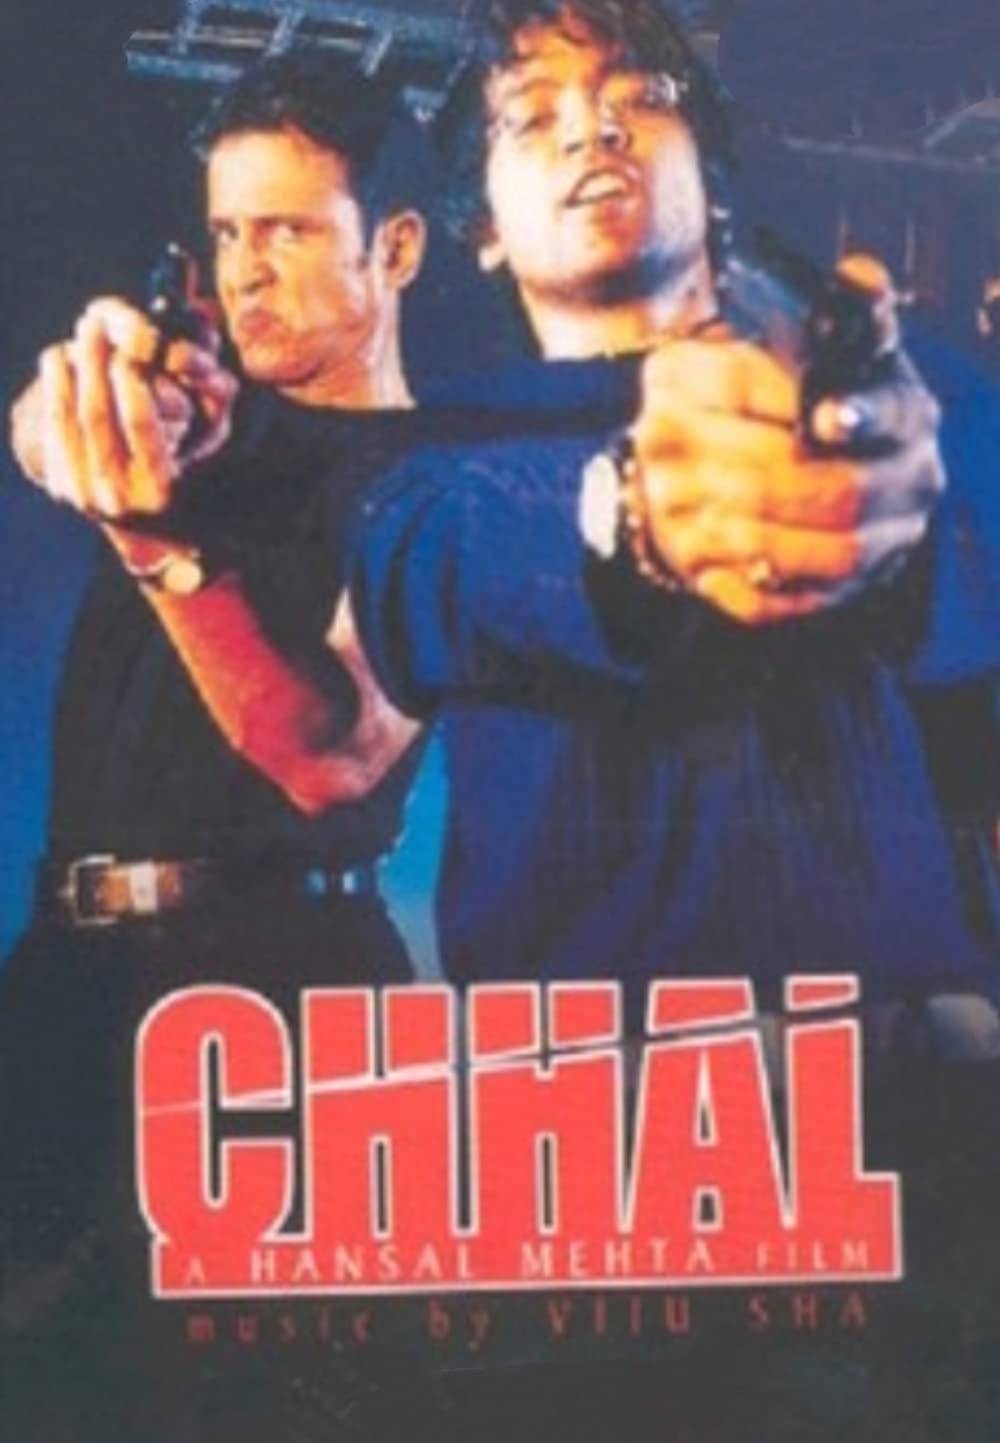 Chhal Poster